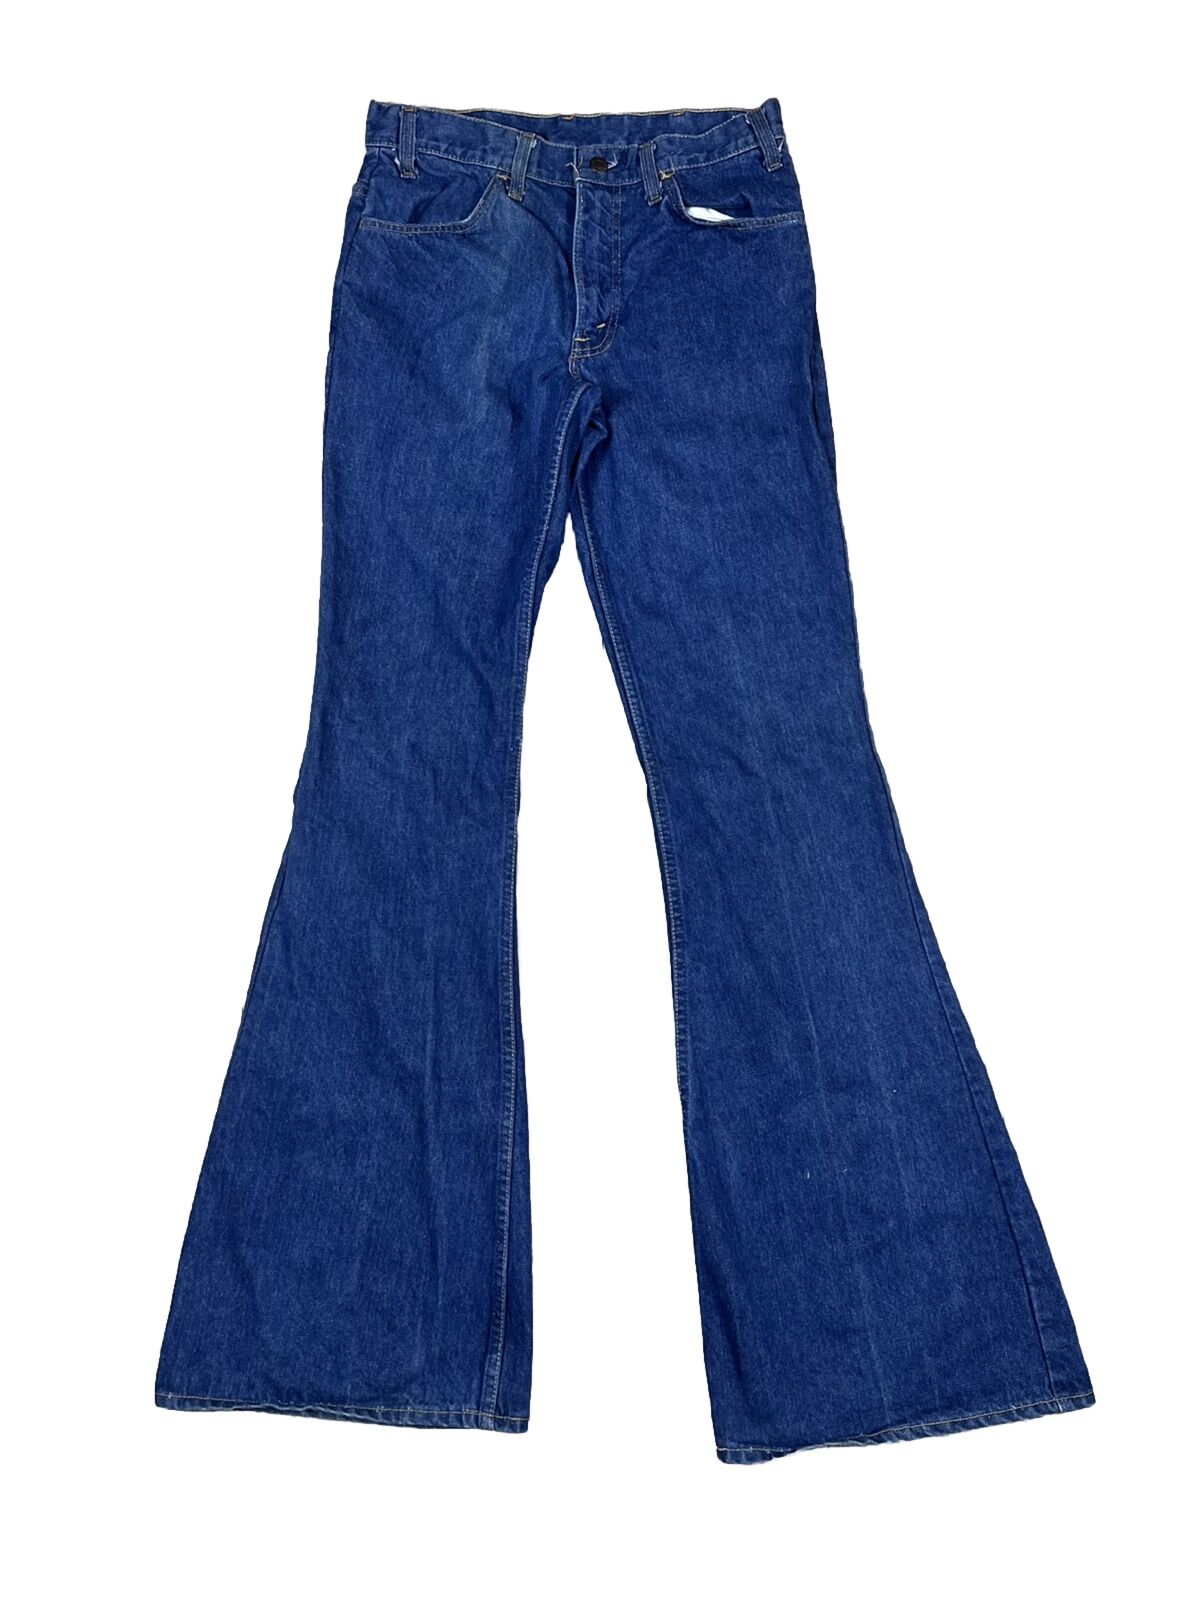 Vintage 70's Levi's Men's Jeans 684 Flare Bell Bottom Orange Tab